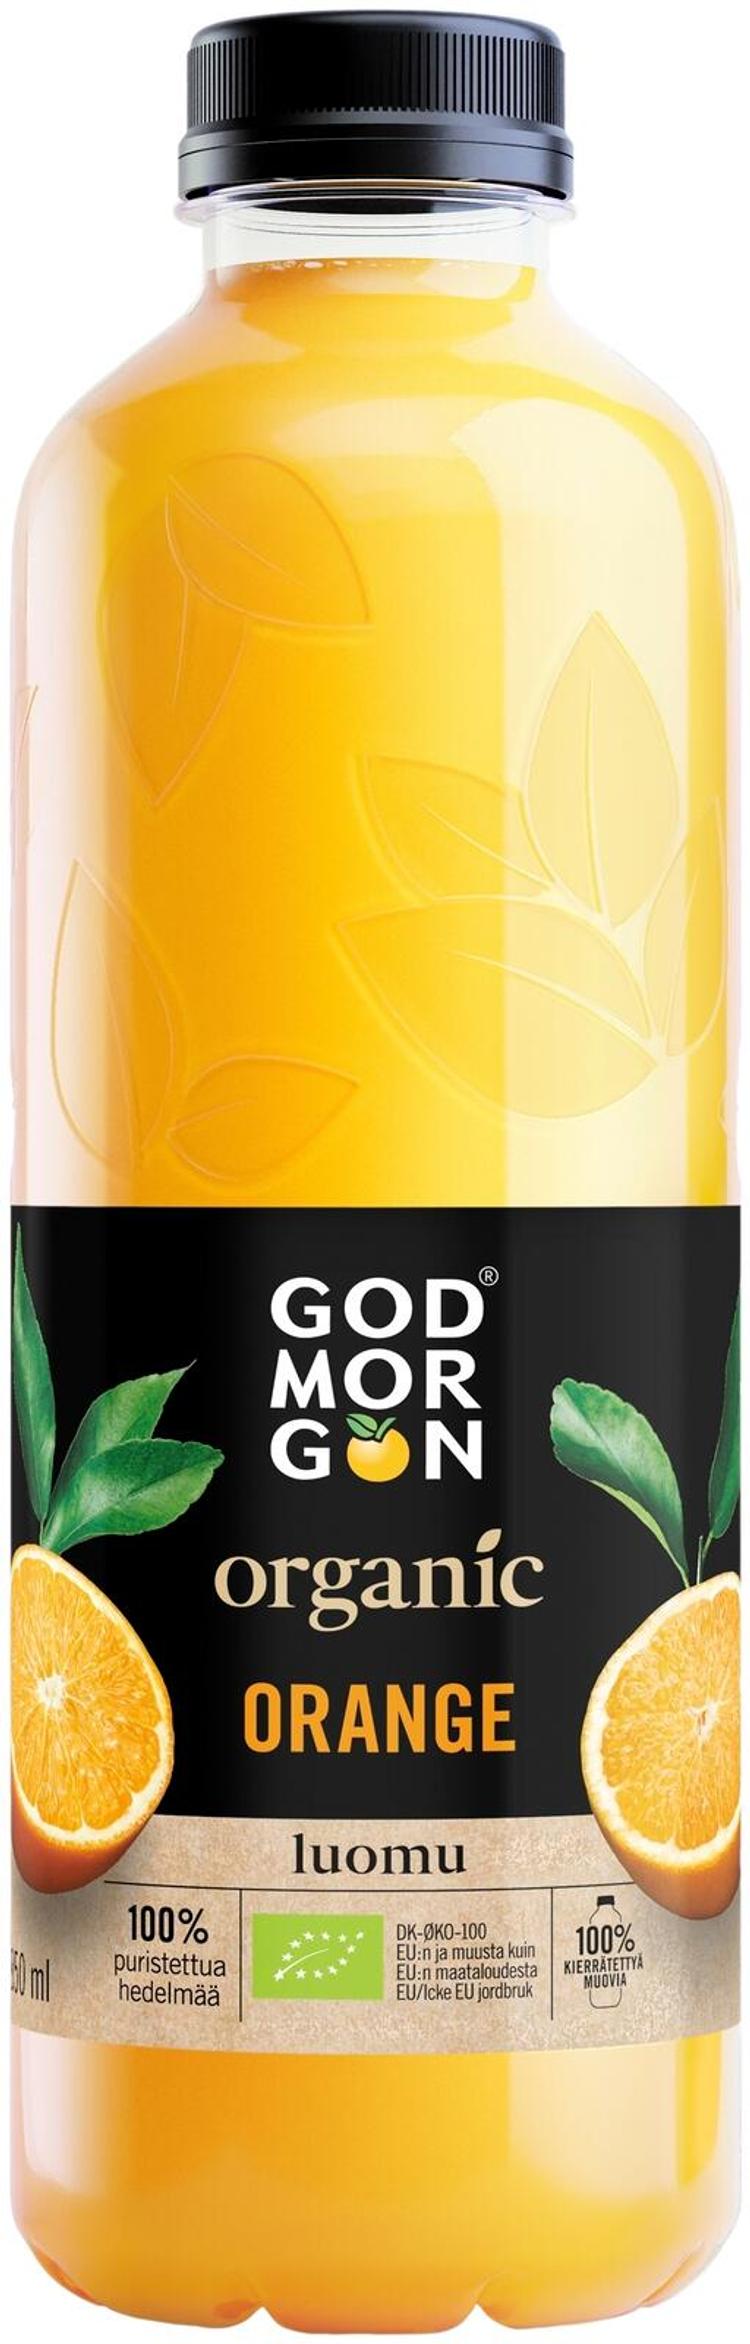 God Morgon Organic Luomu Appelsiinimehu 0,85L